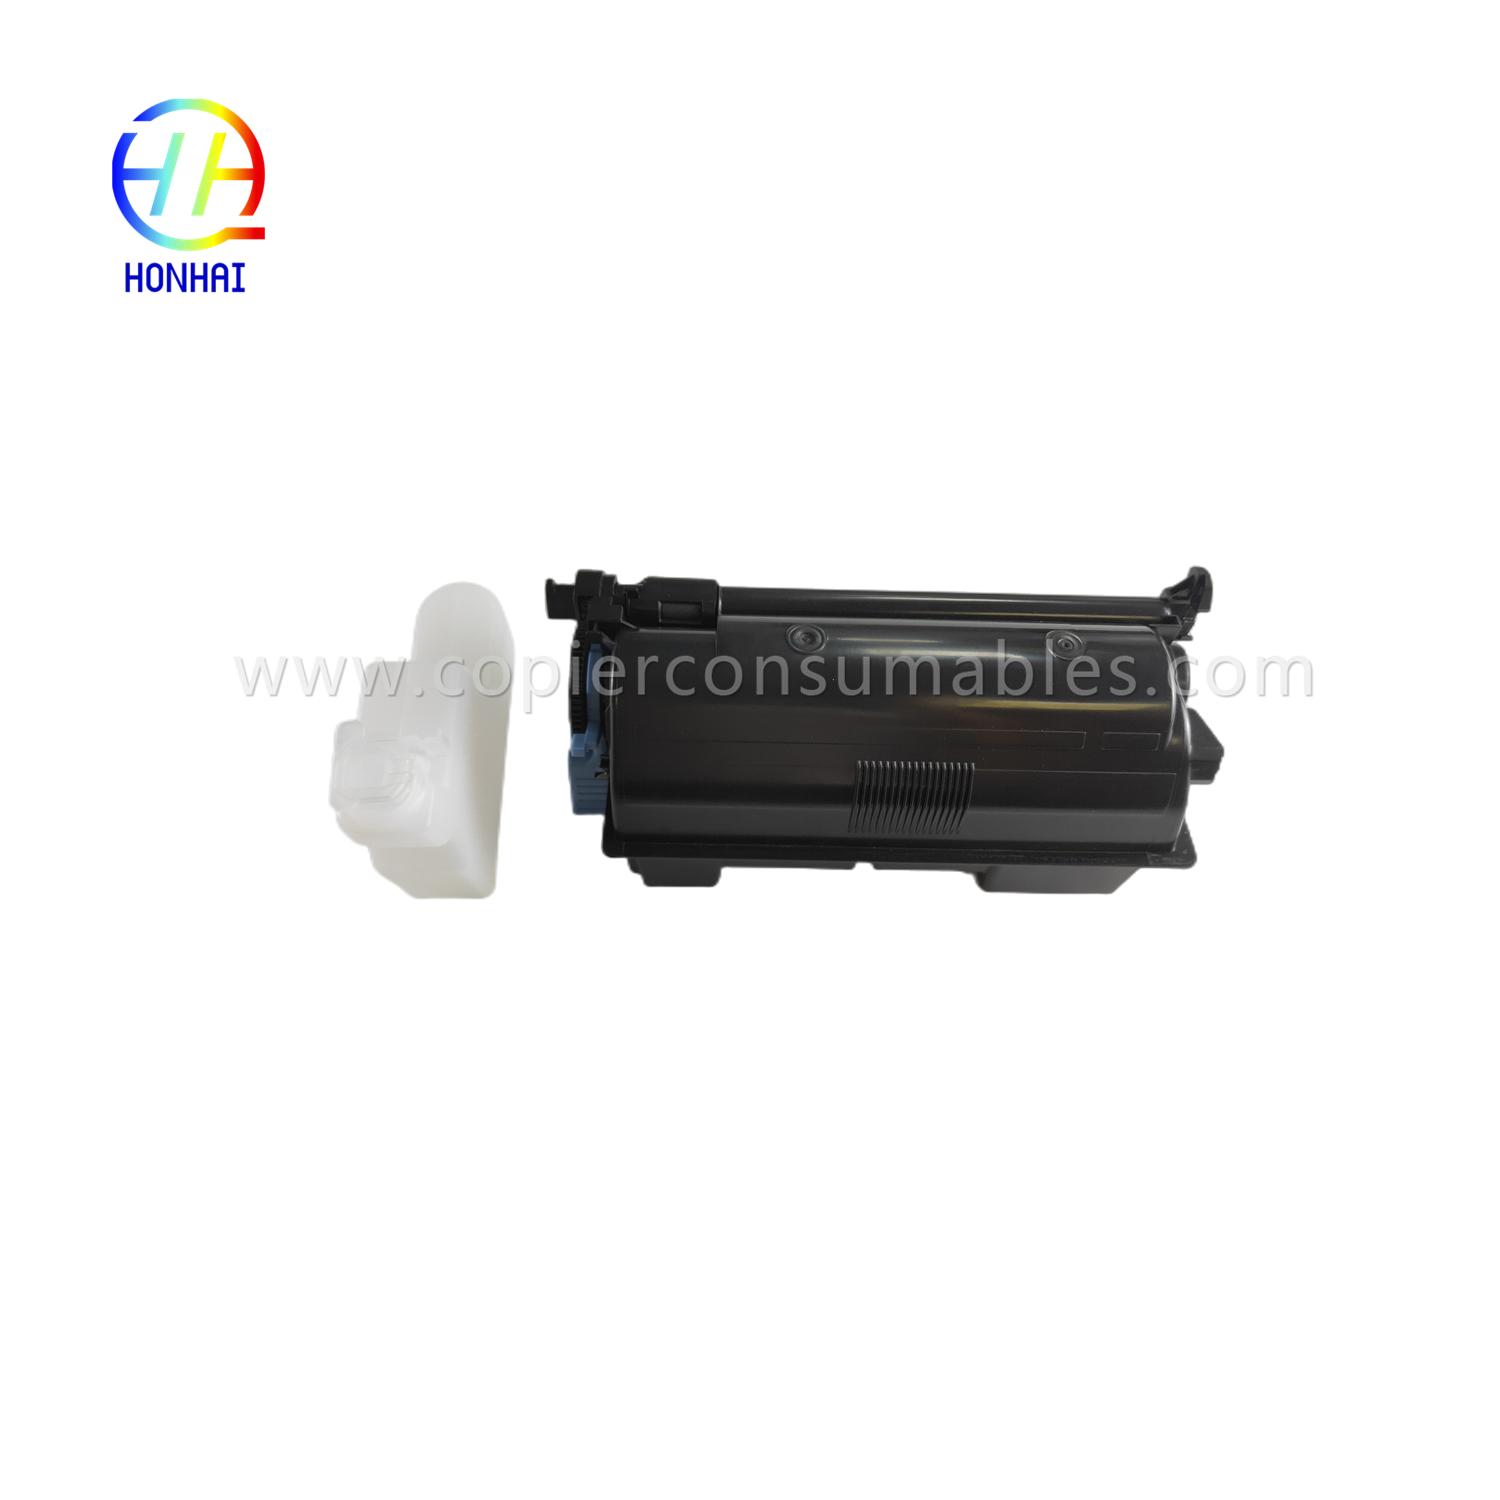 https://www.copierconsumables.com/toner-cartridge-for-ricoh-mp501-mp601-sp-5300-sp-5310-product/